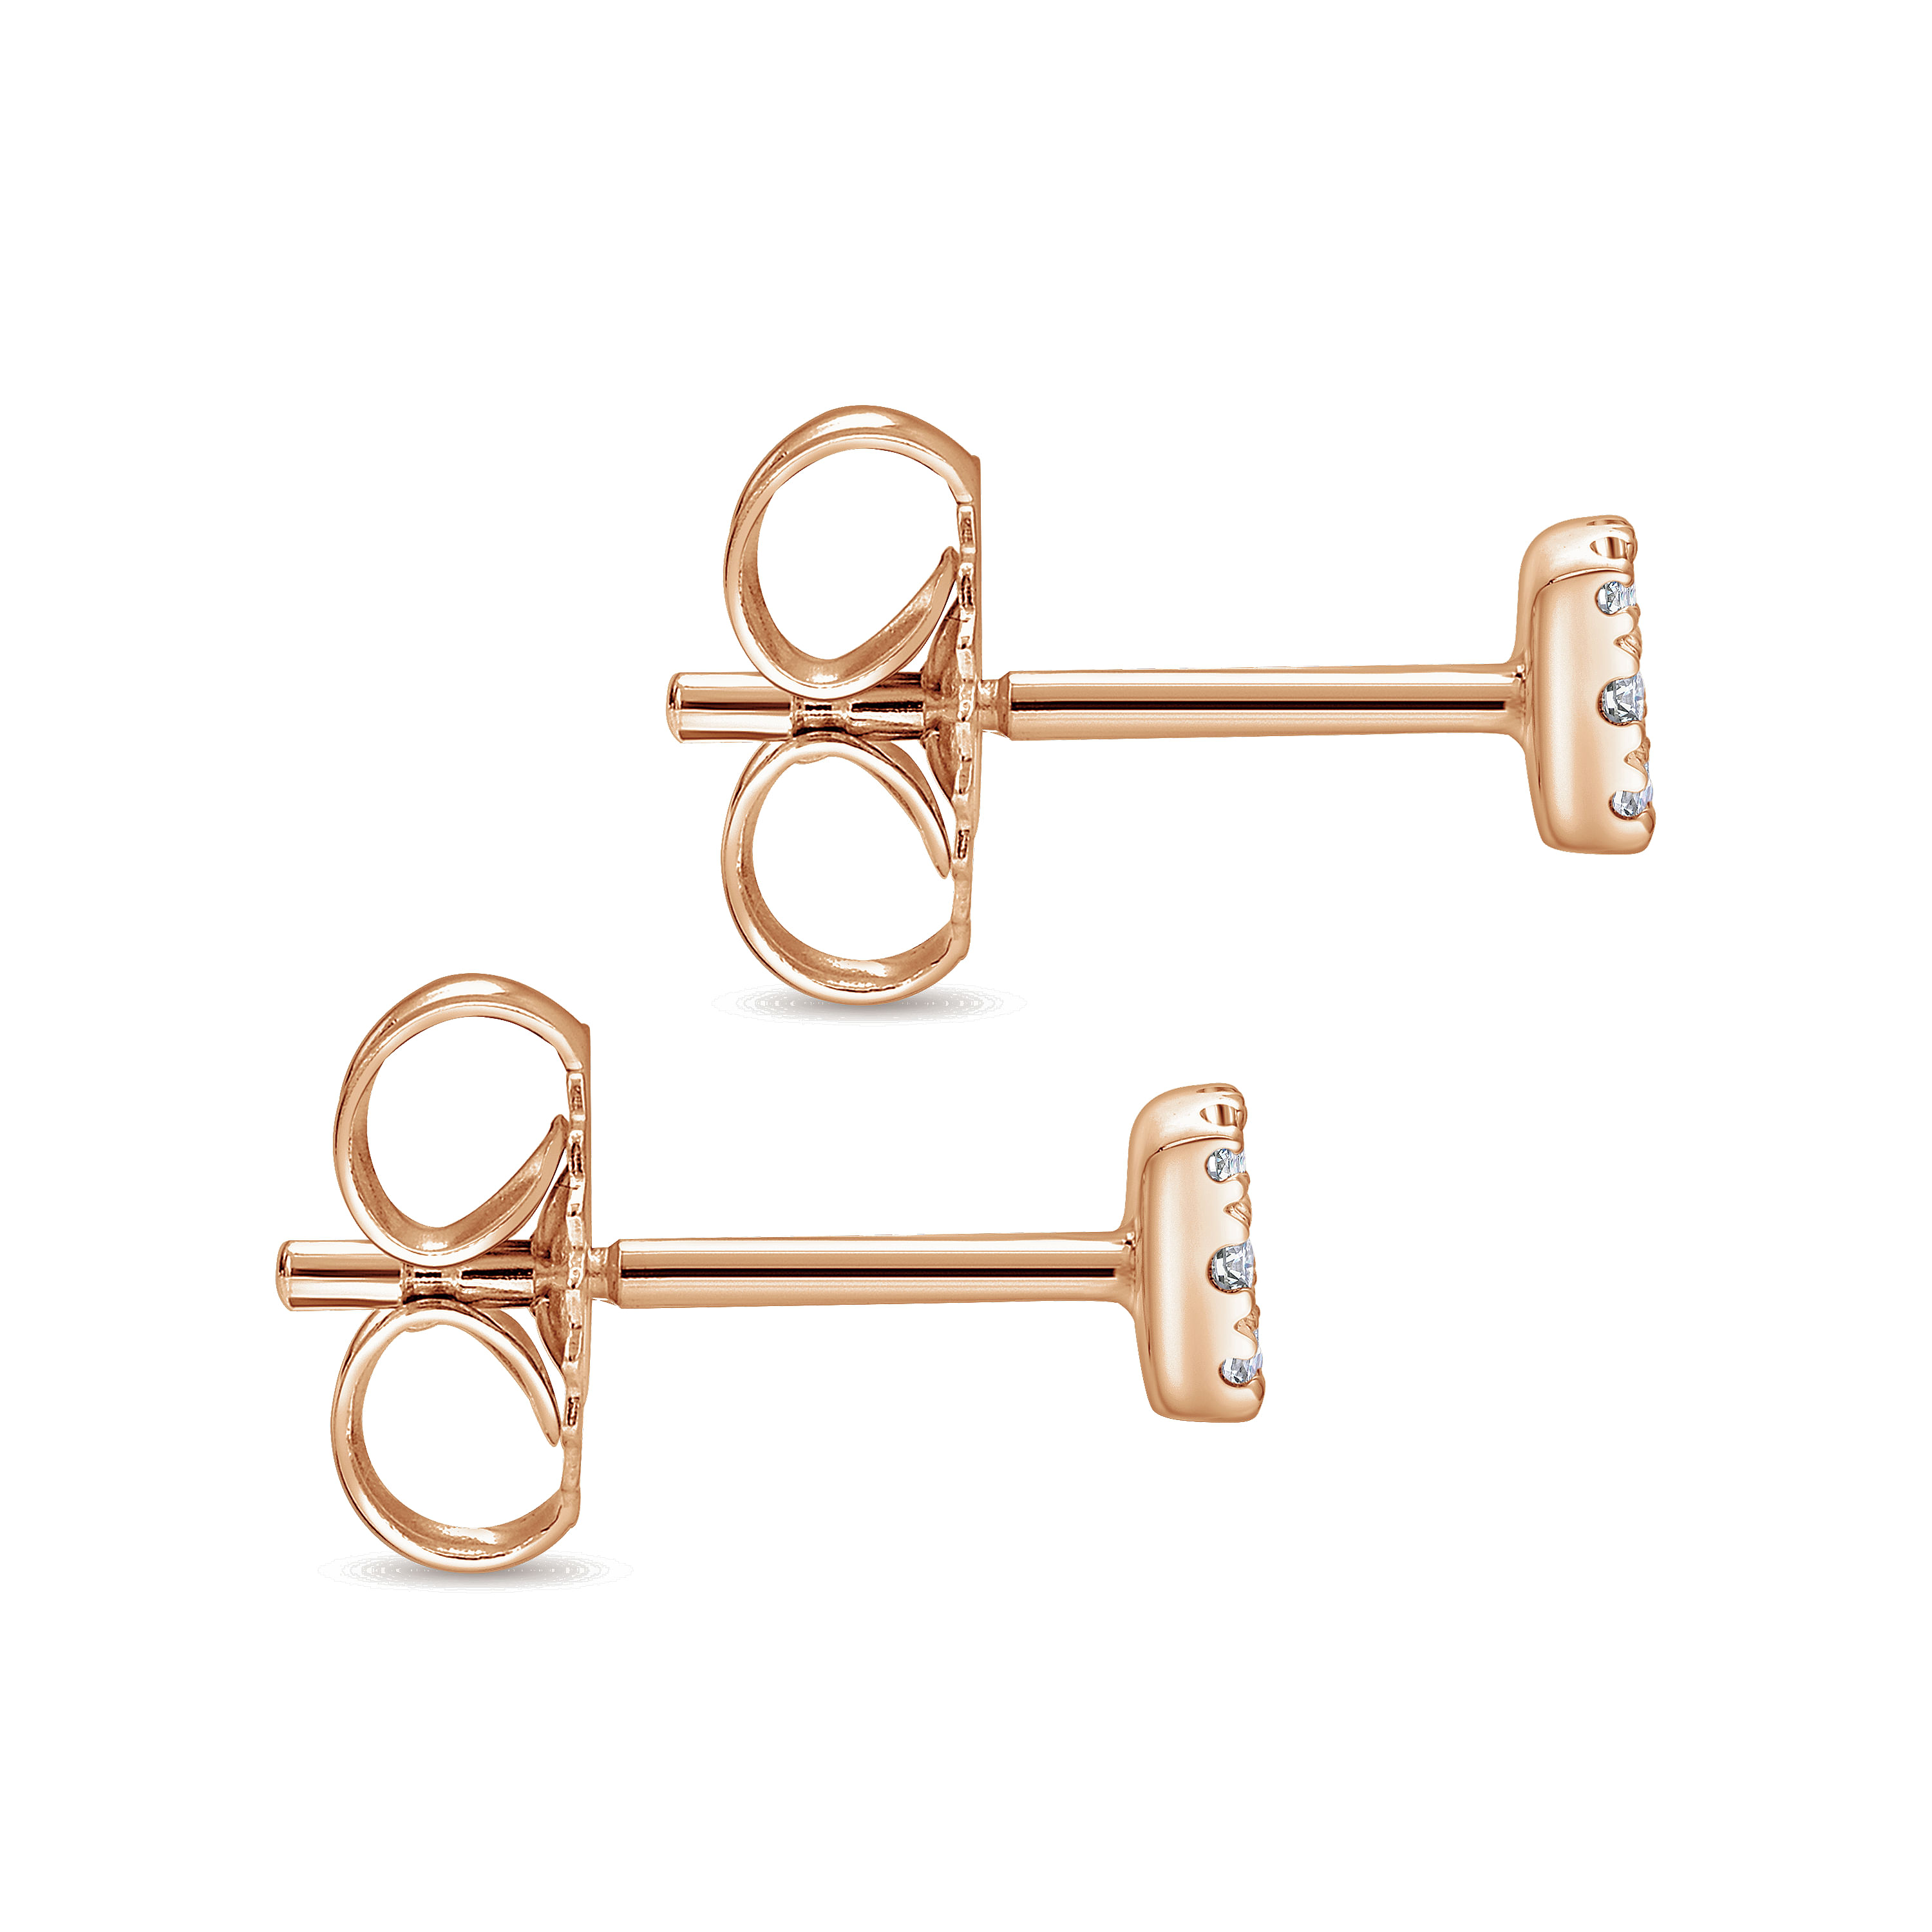 14K Rose Gold Pavé Diamond Cushion Cut Stud Earrings